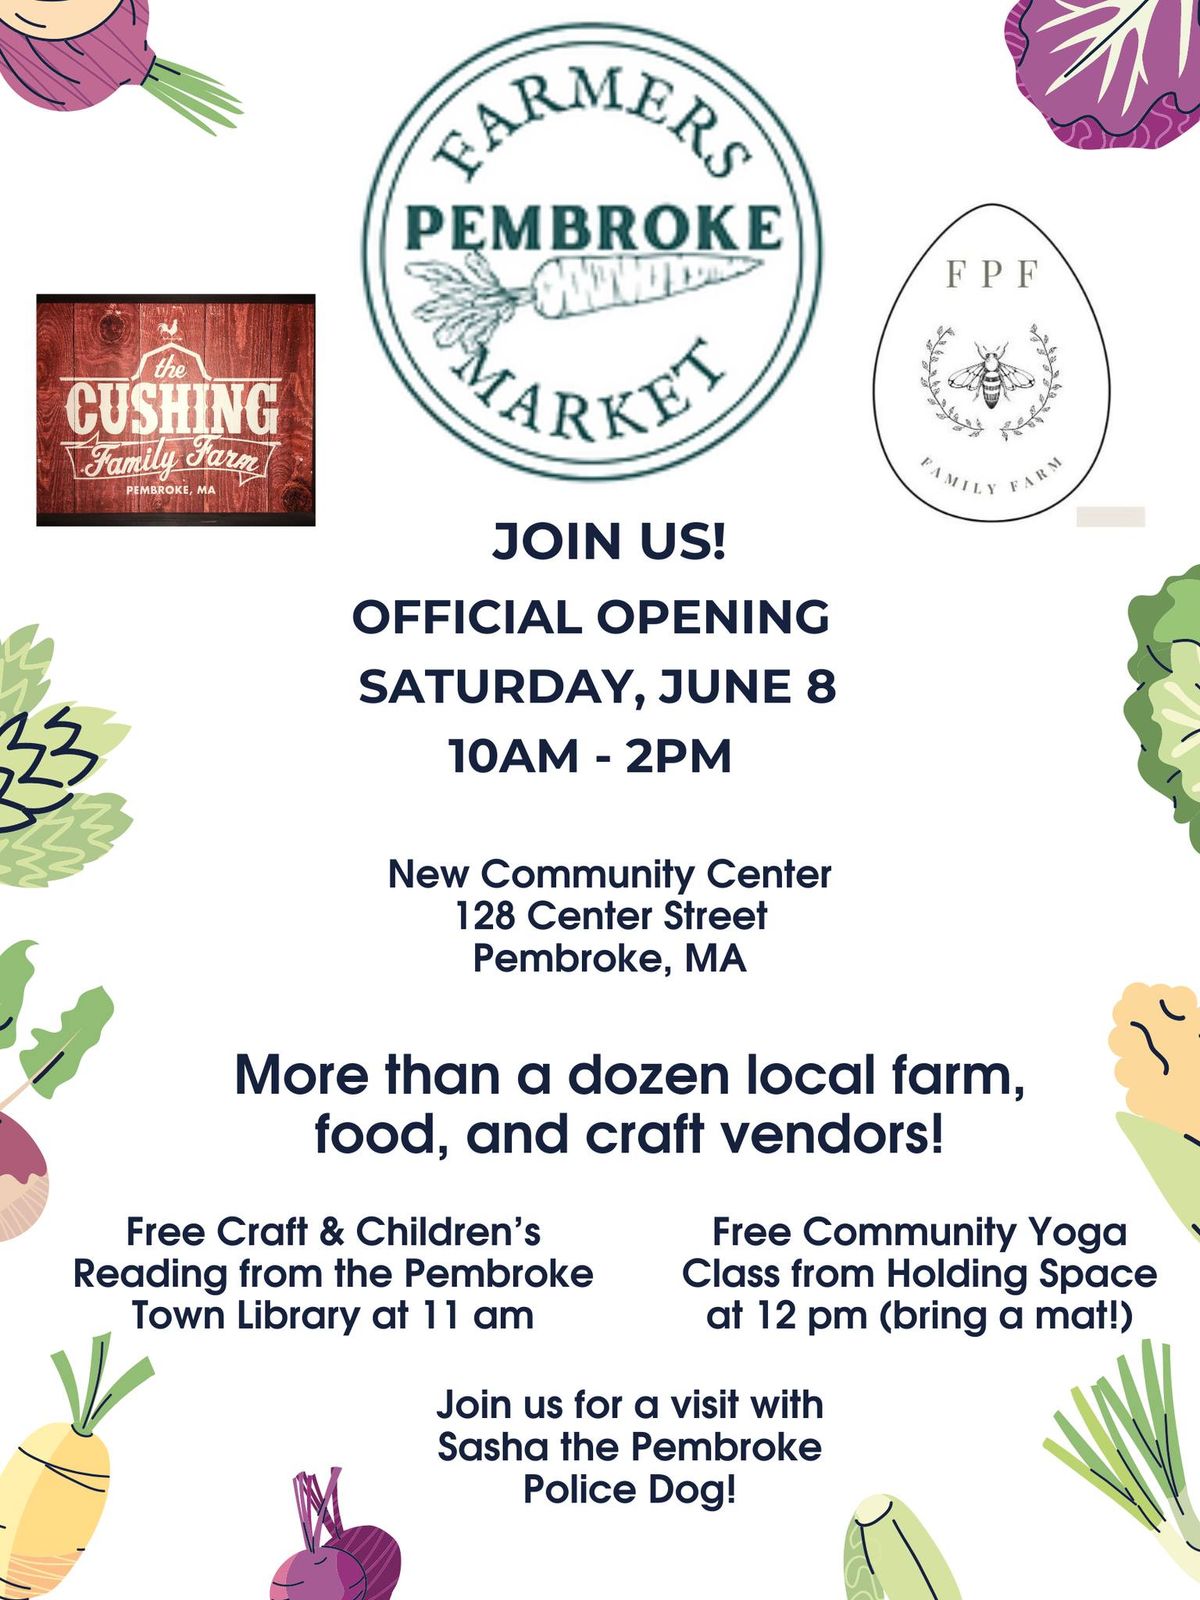 Grand opening of the Pembroke Farmers Market!